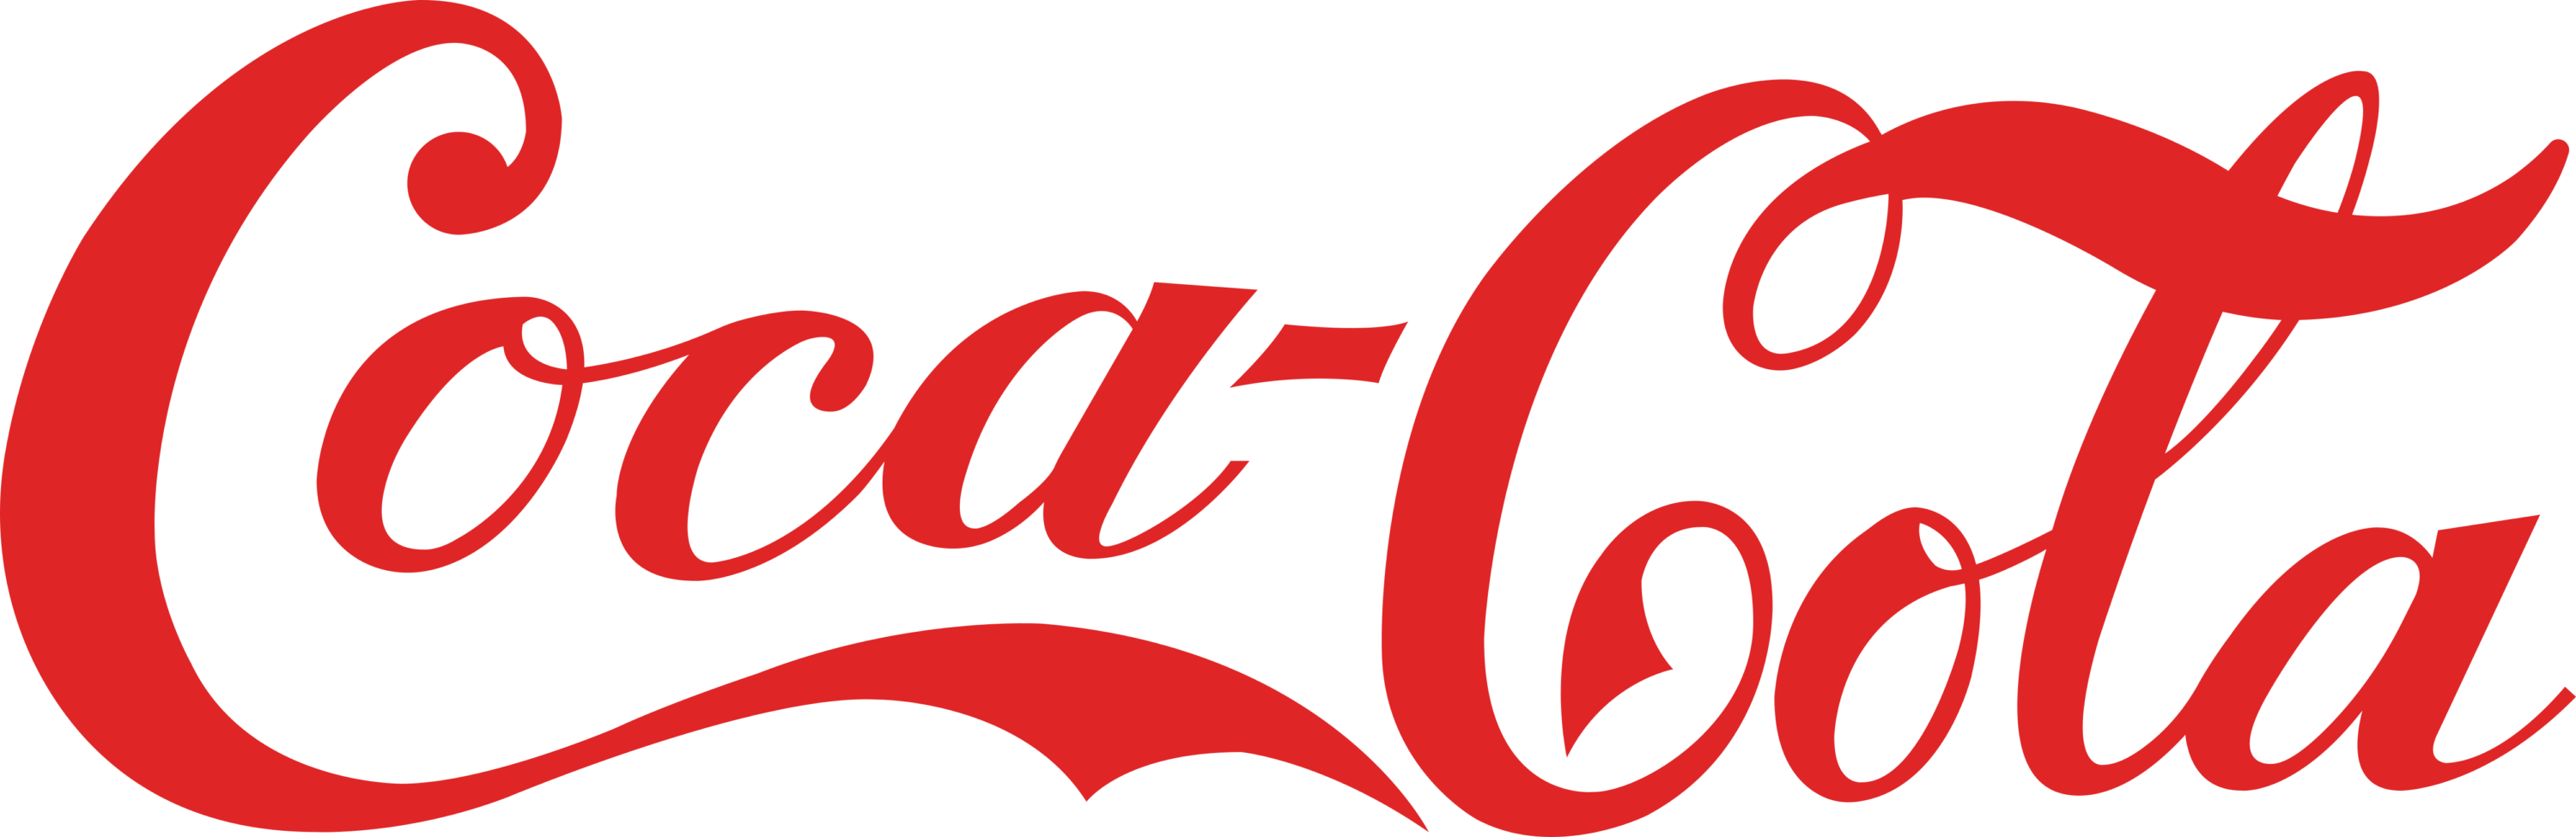 Coca Cola Logo 1892